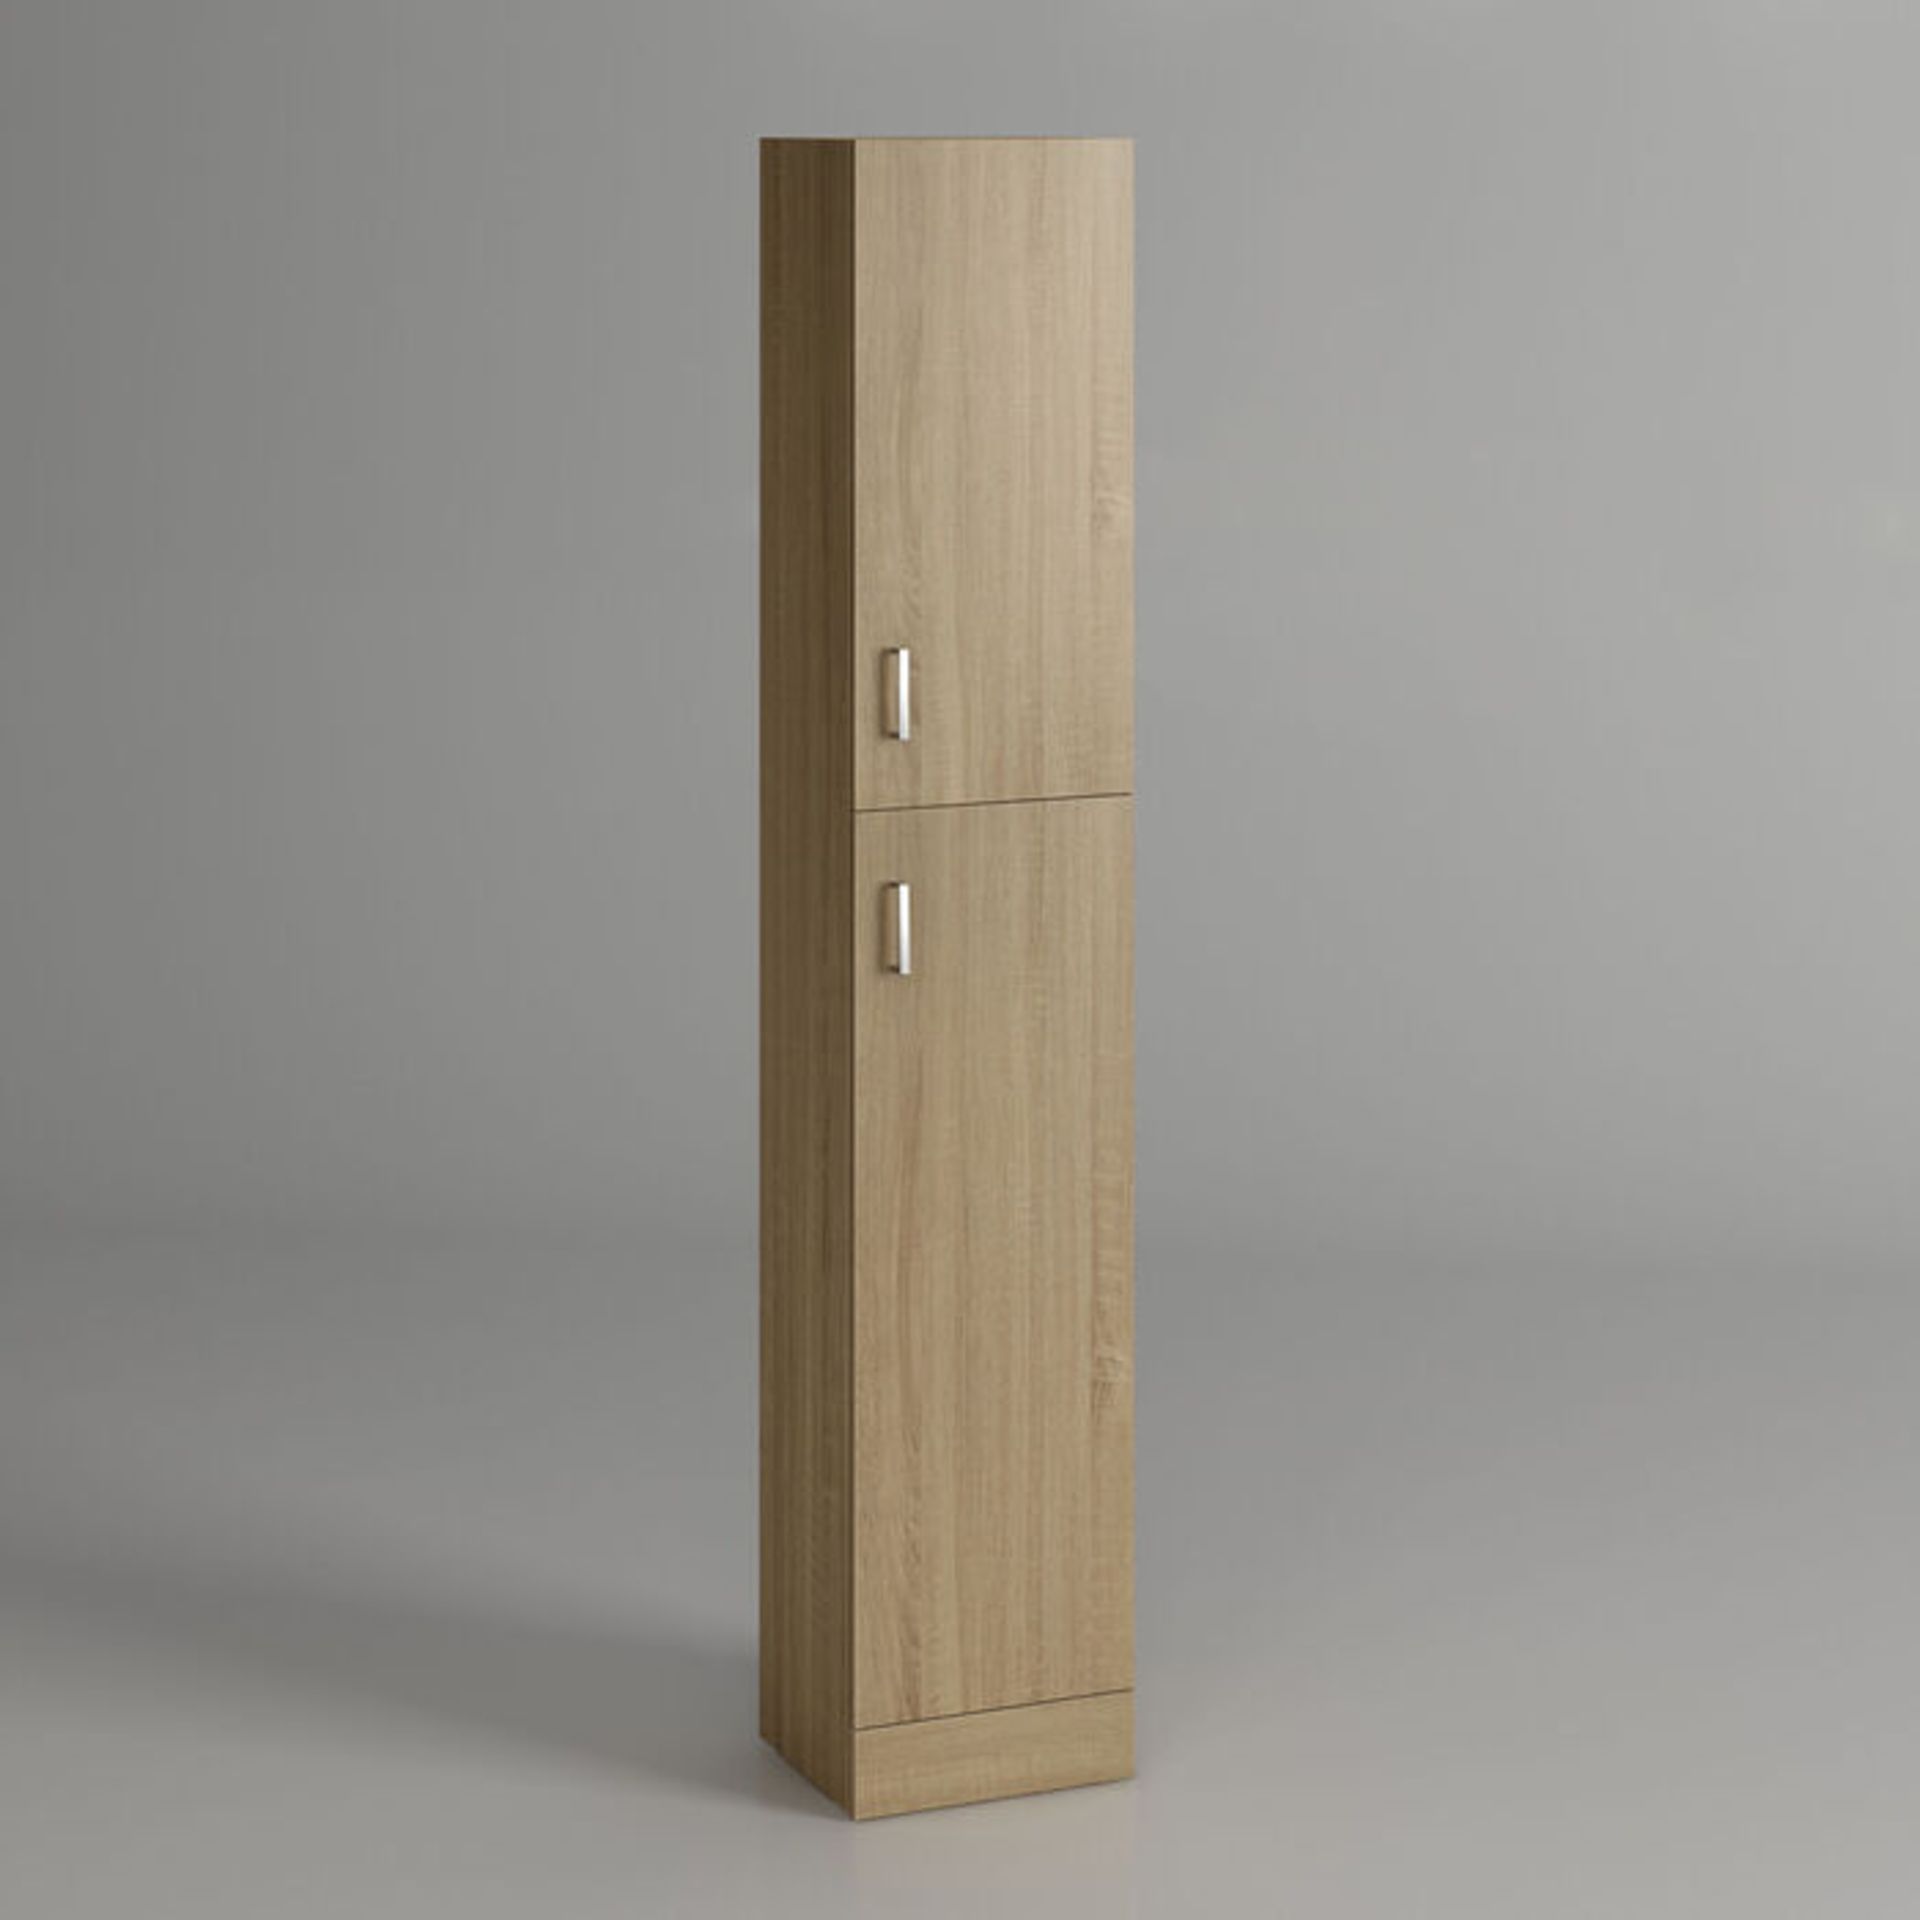 (XL31) 1900x300mm Quartz Oak Effect Tall Storage Cabinet - Floor Standing. RRP £399.99. Oak e... - Image 2 of 3